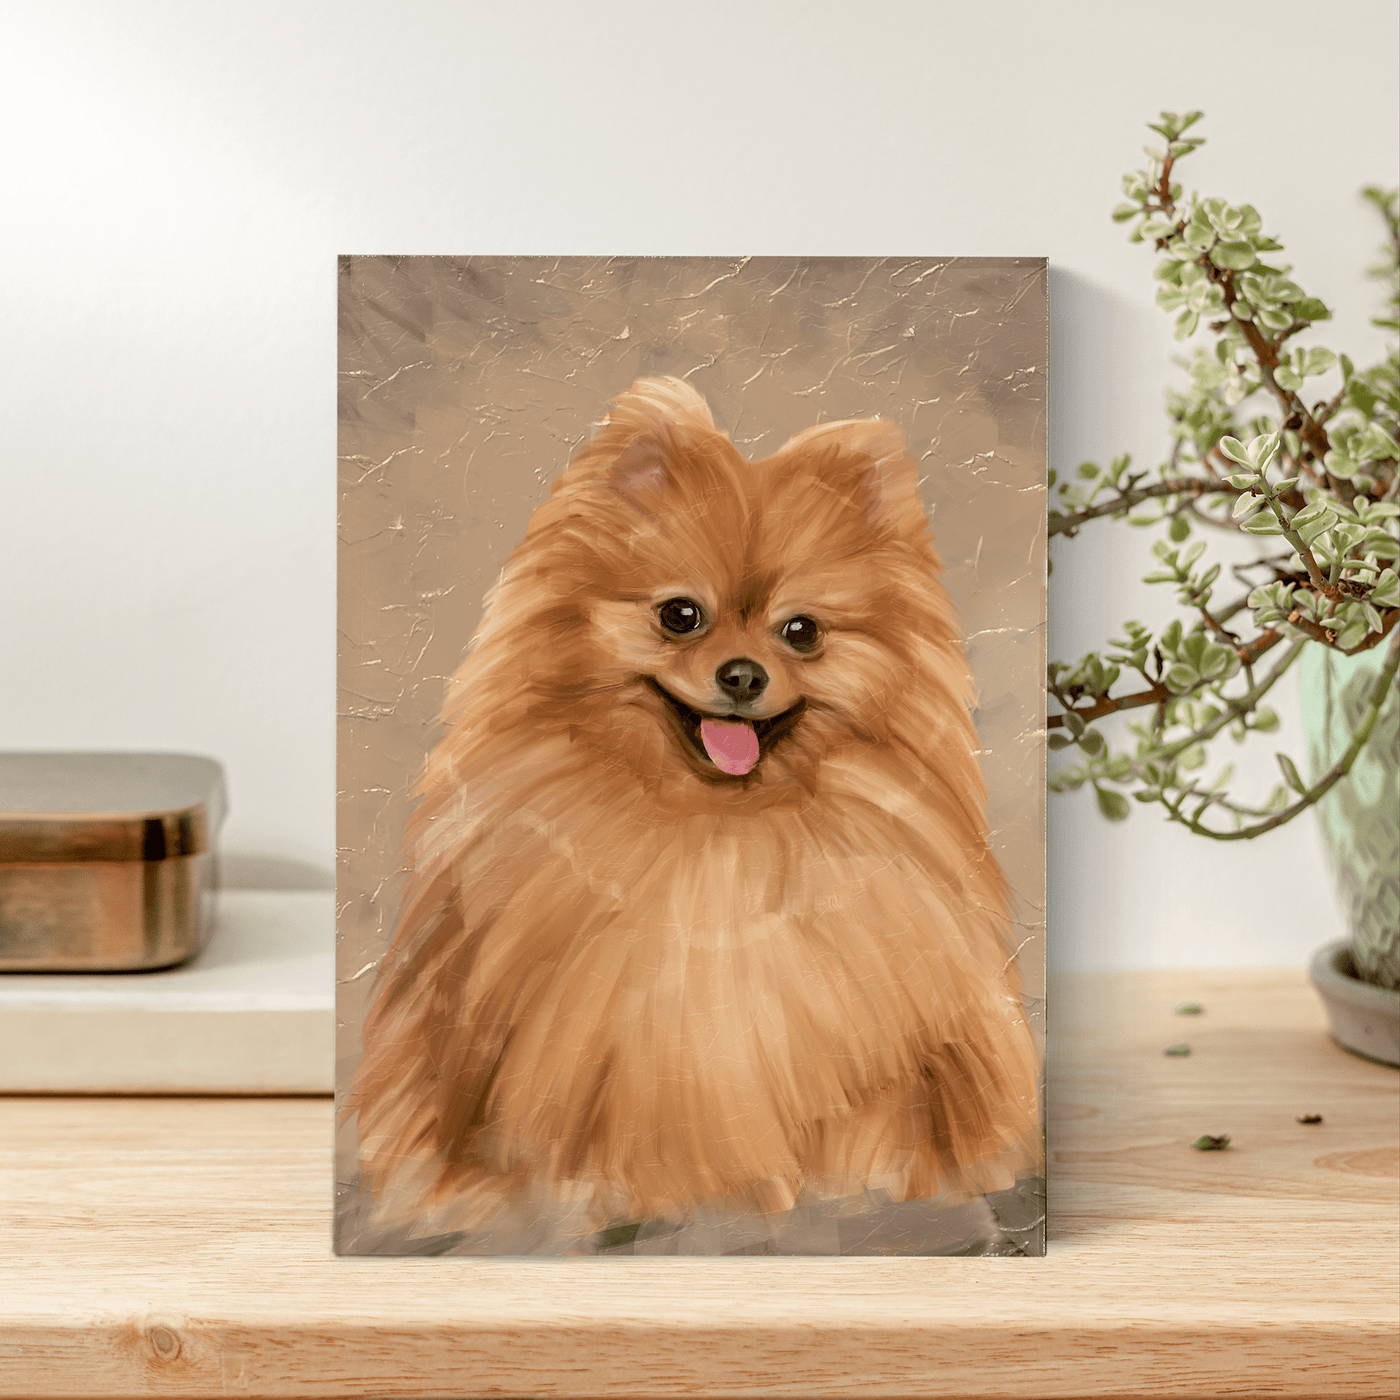 acrylic pet painting of an orange fur cat